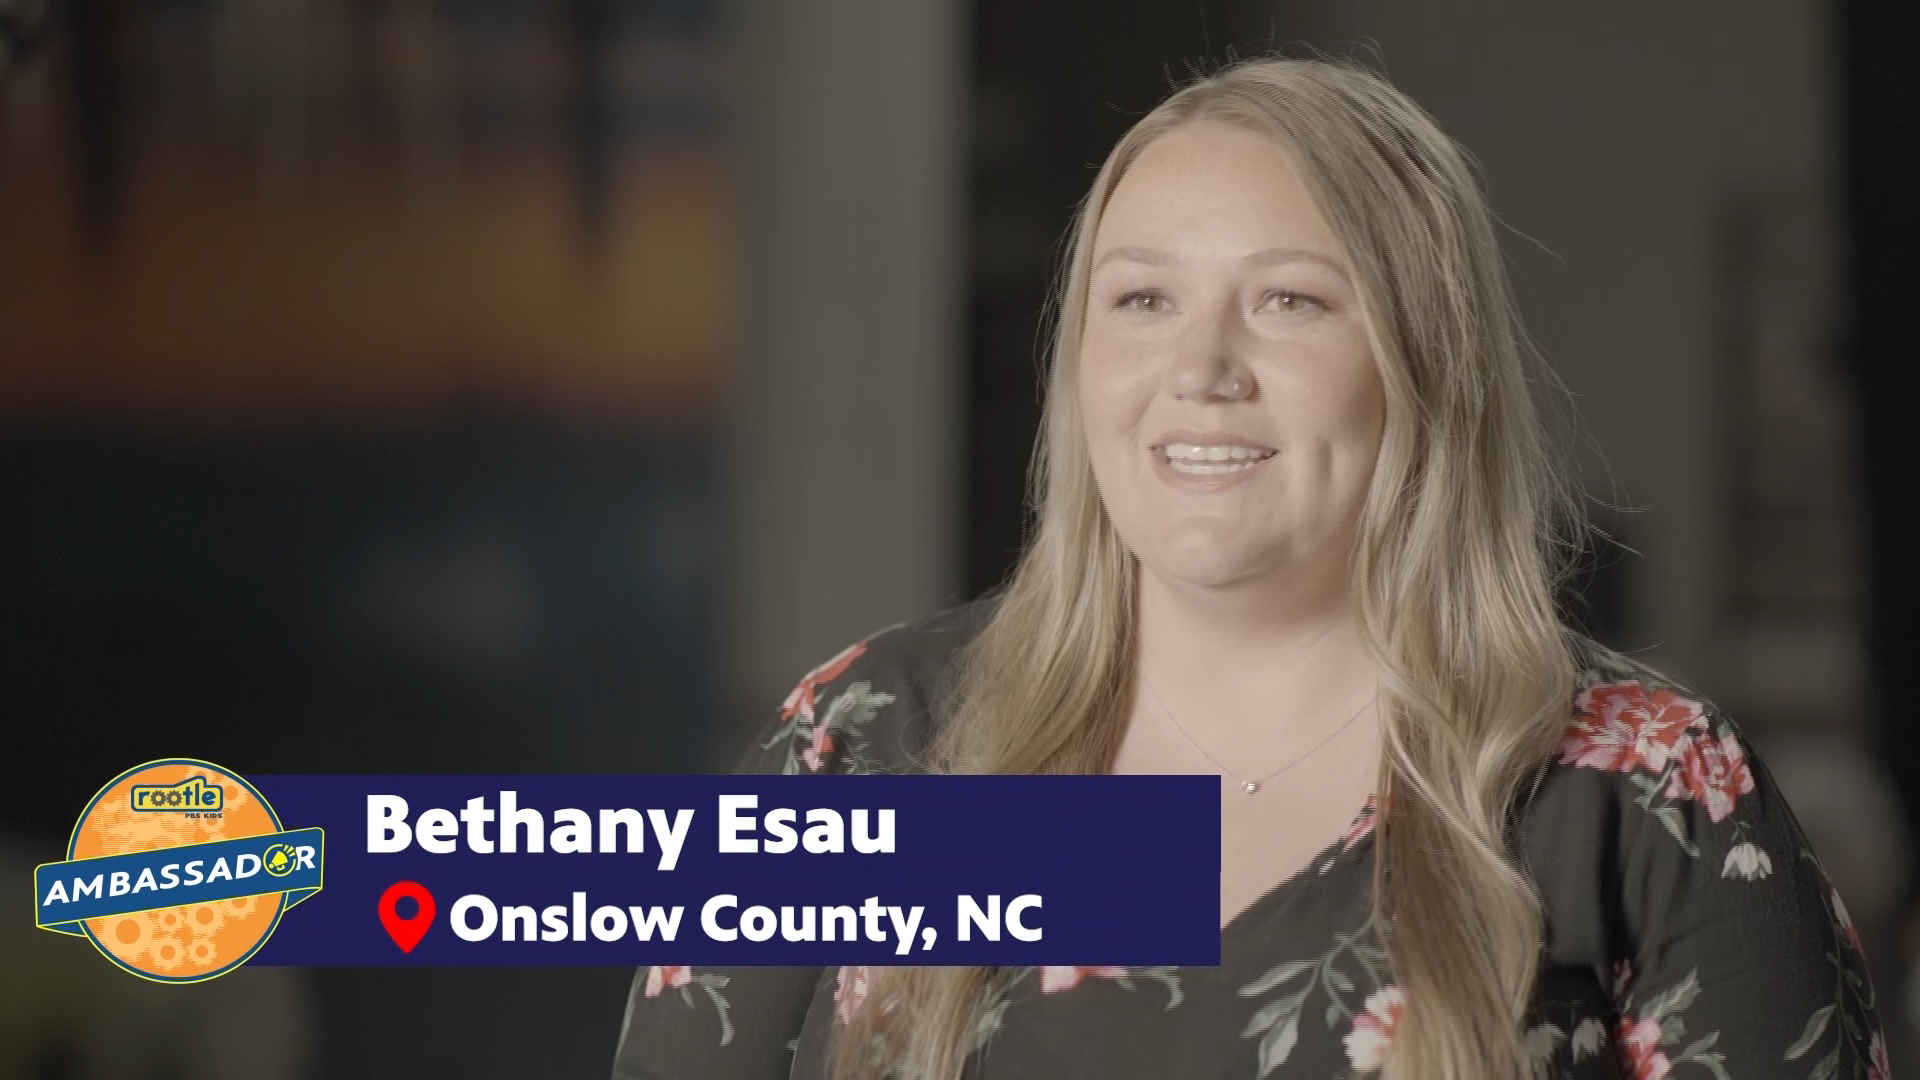 Meet Bethany Esau, Onslow County Rootle Ambassador